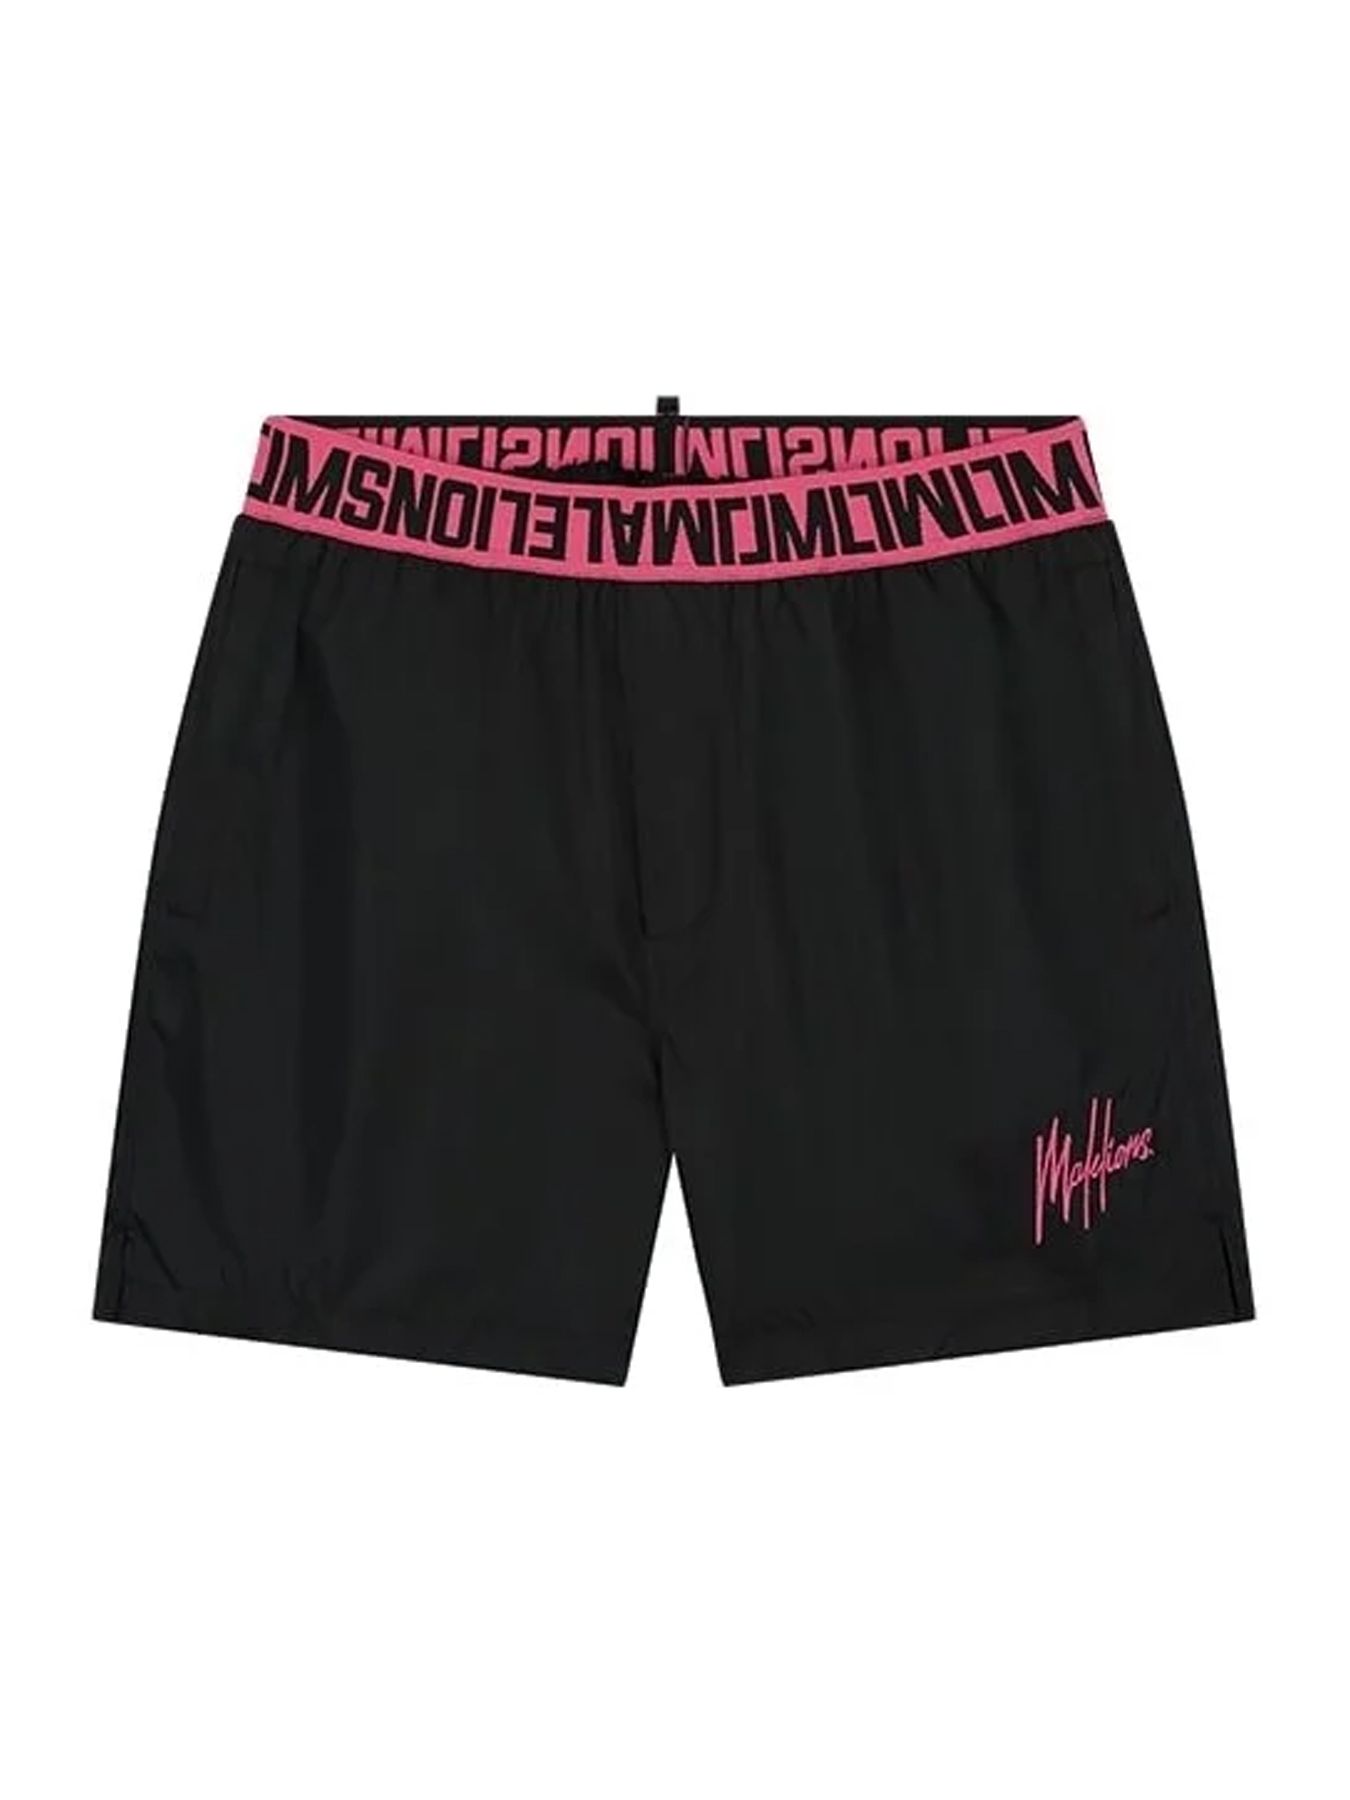 Malelions Men Venetian swim shorts Black/Hot pink 00109022-154